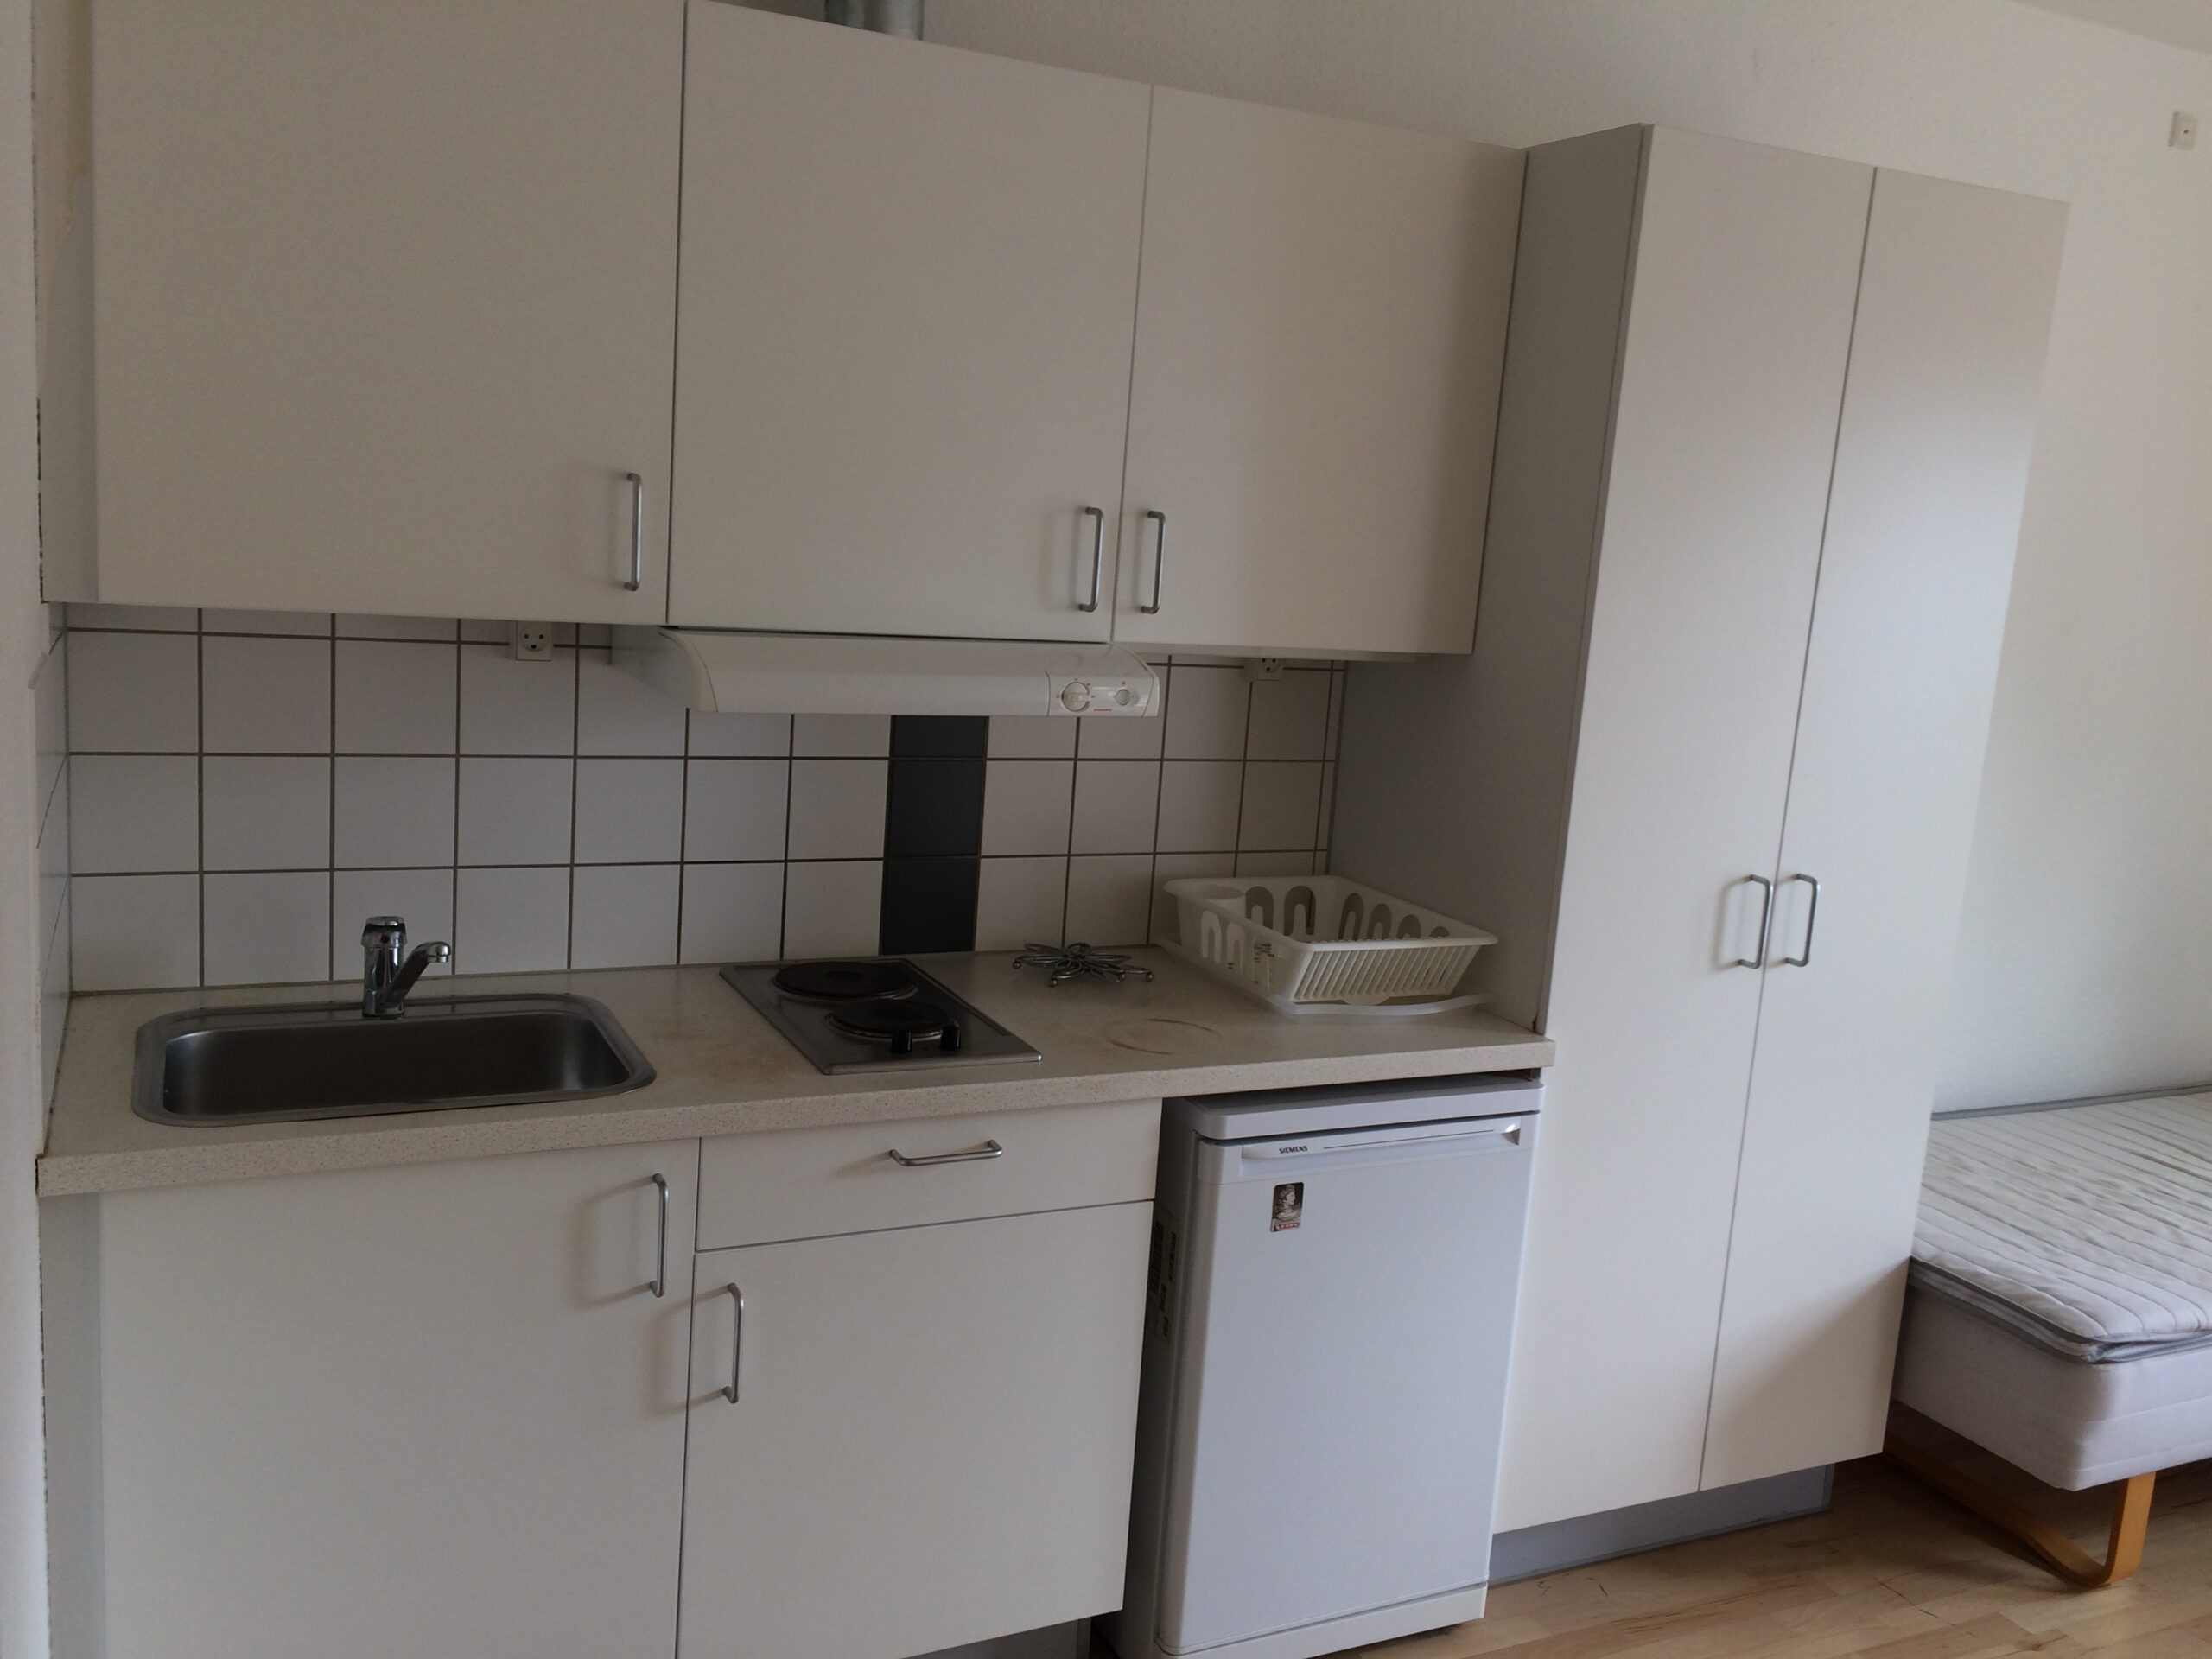 The New Emdrupborg Dormitory - Housing Foundation